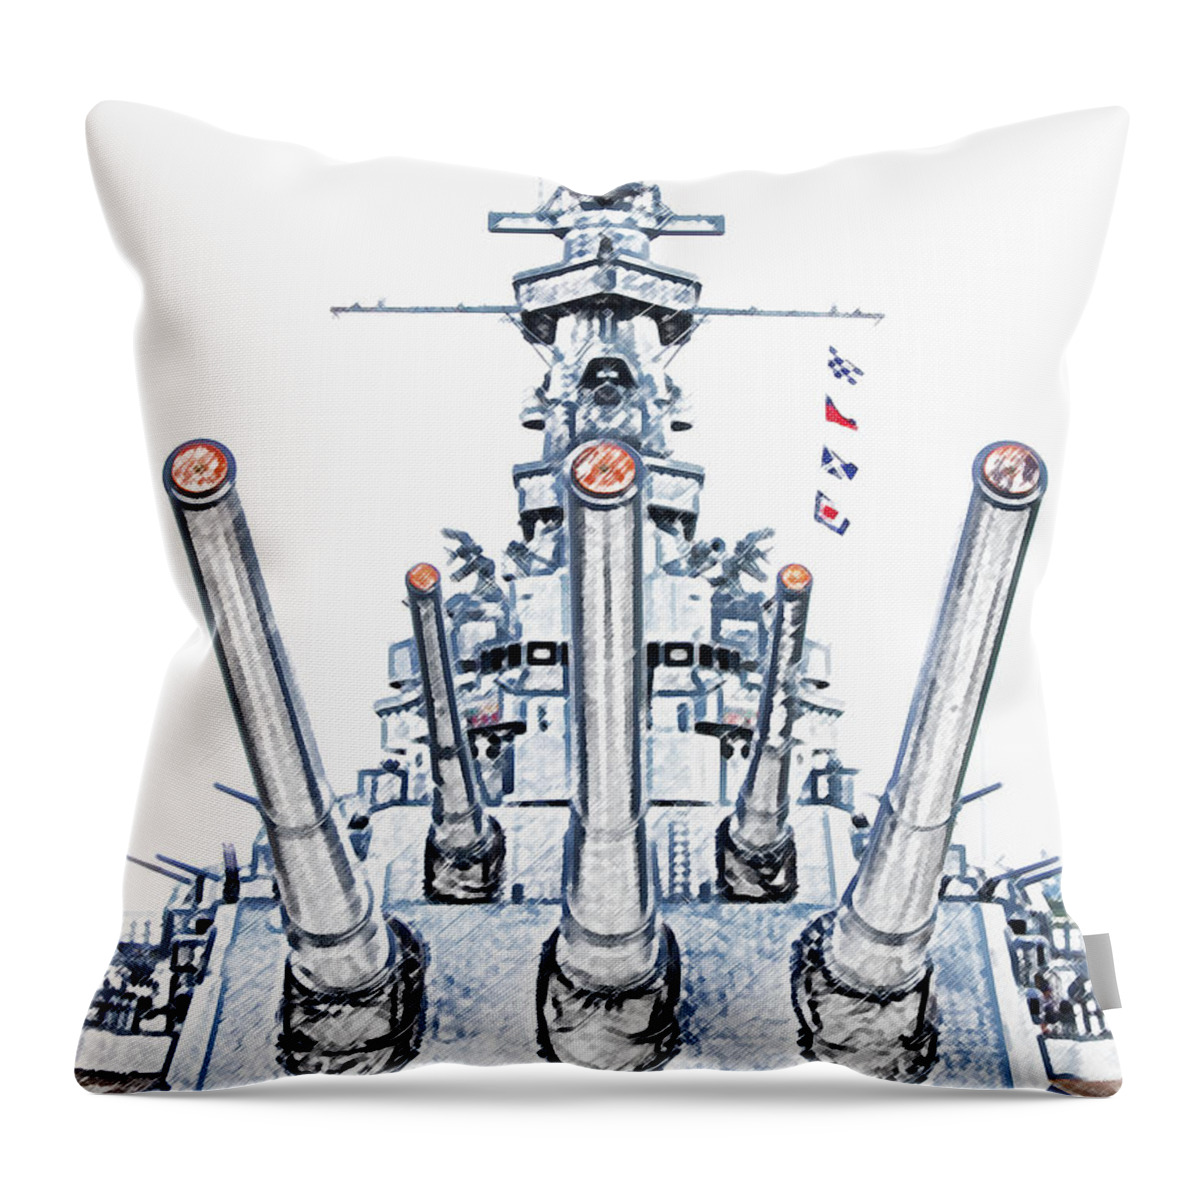 Uss Alabama Throw Pillow featuring the photograph USS Alabama Battleship Guns Tower and Flags Mobile Alabama Colored Pencil Digital Art by Shawn O'Brien